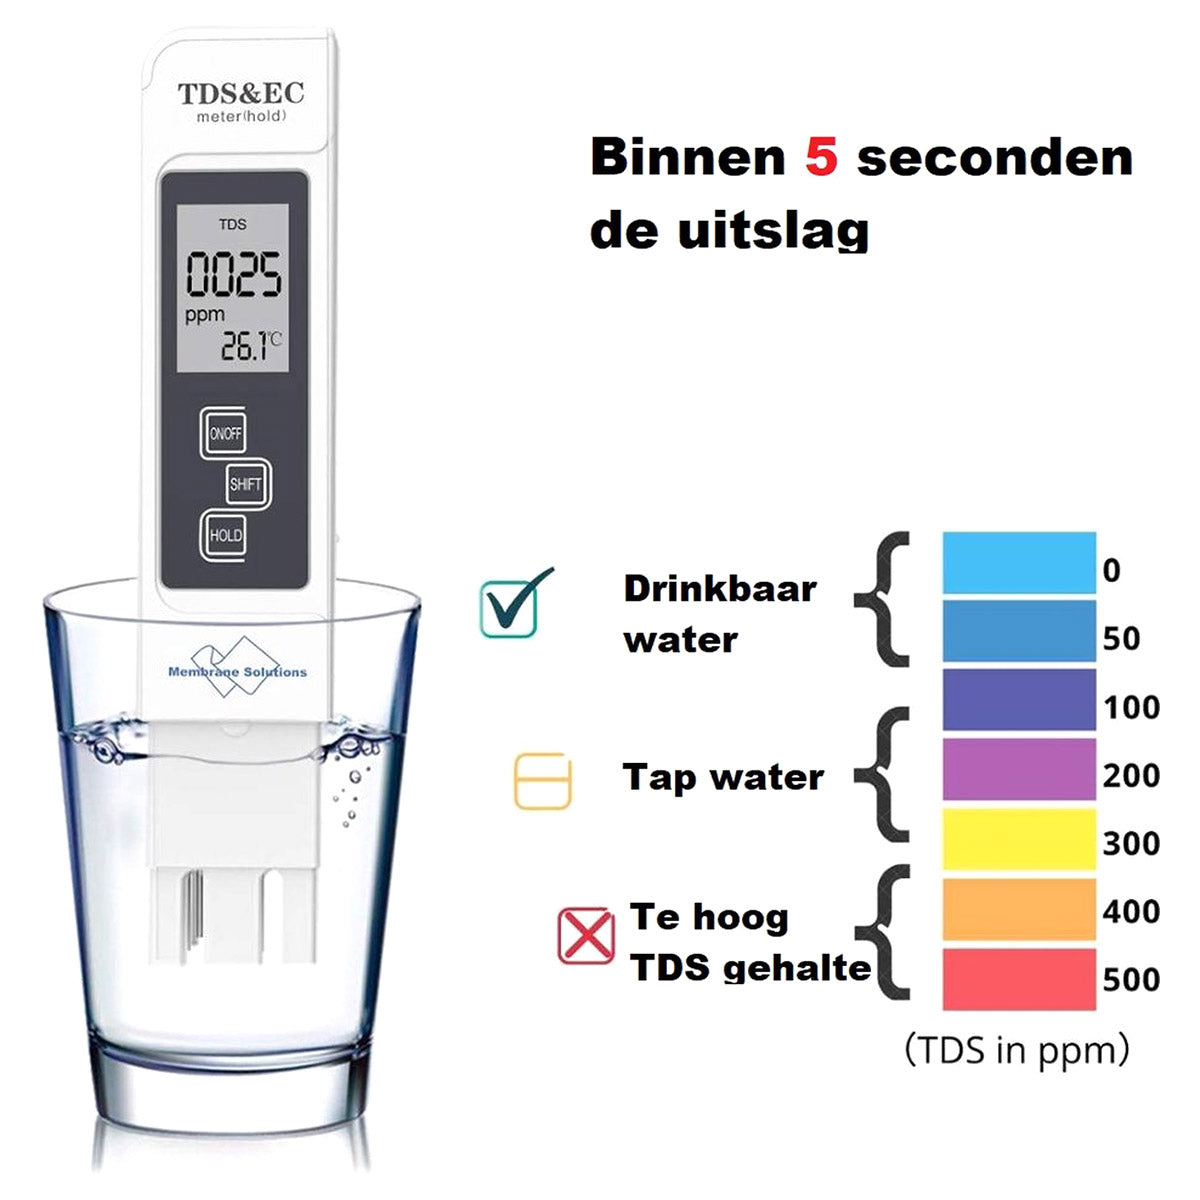 <tc>Ariko</tc> Professional Water Hardness Meter - Accurate 3-in-1 TDS, EC, and Water Temperature Meter - including battery